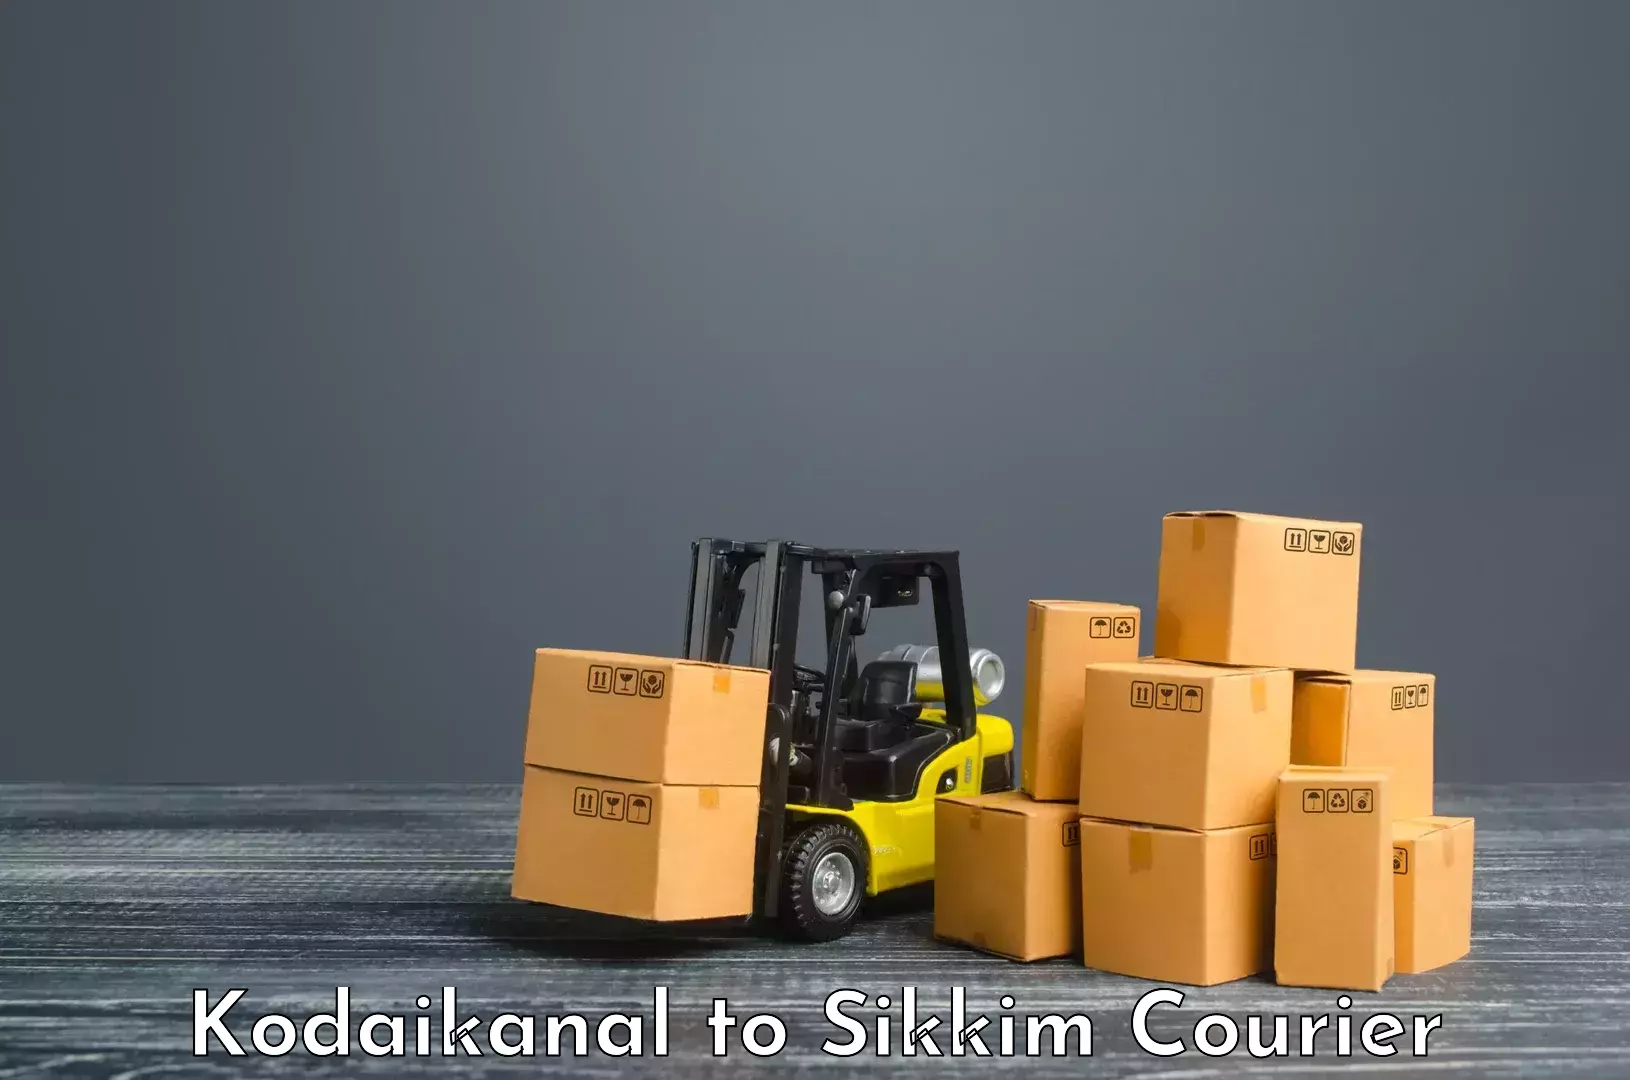 Enhanced delivery experience Kodaikanal to Pelling